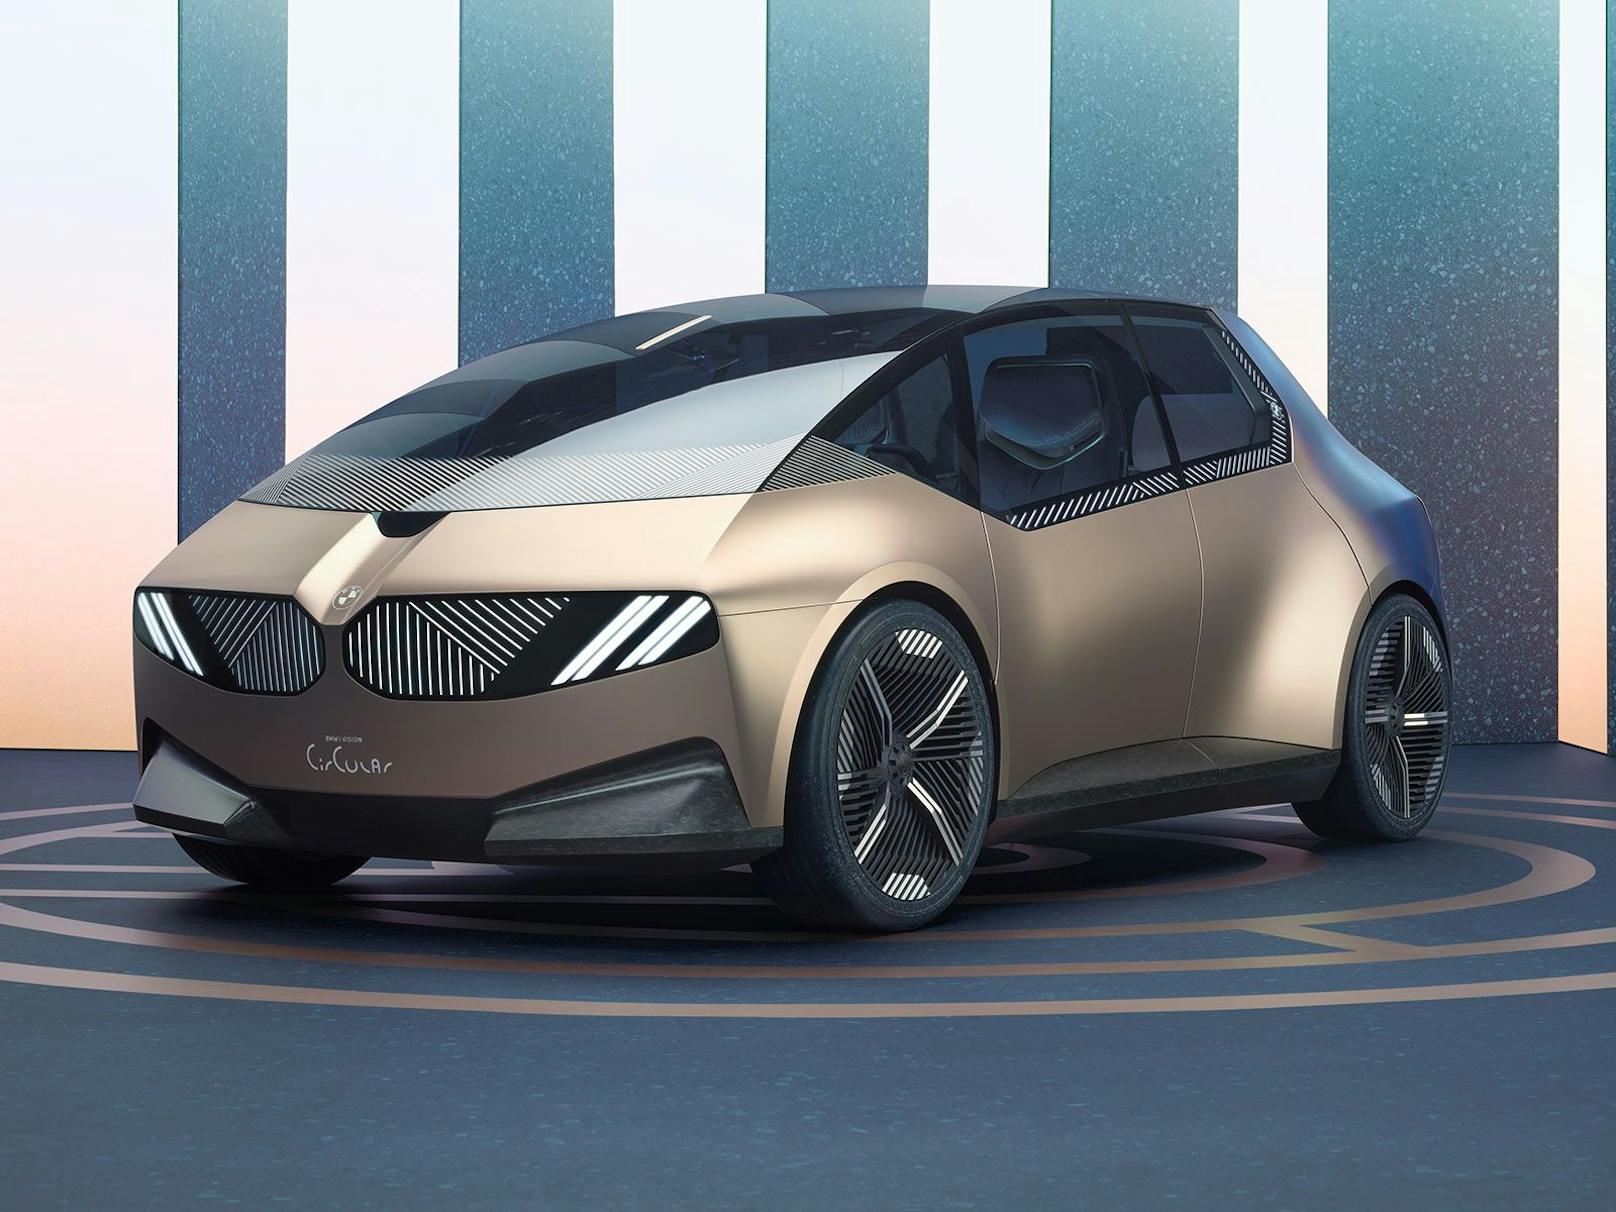 Ein komplett neues Design prägt das BMW i Vision Circular Concept Car.